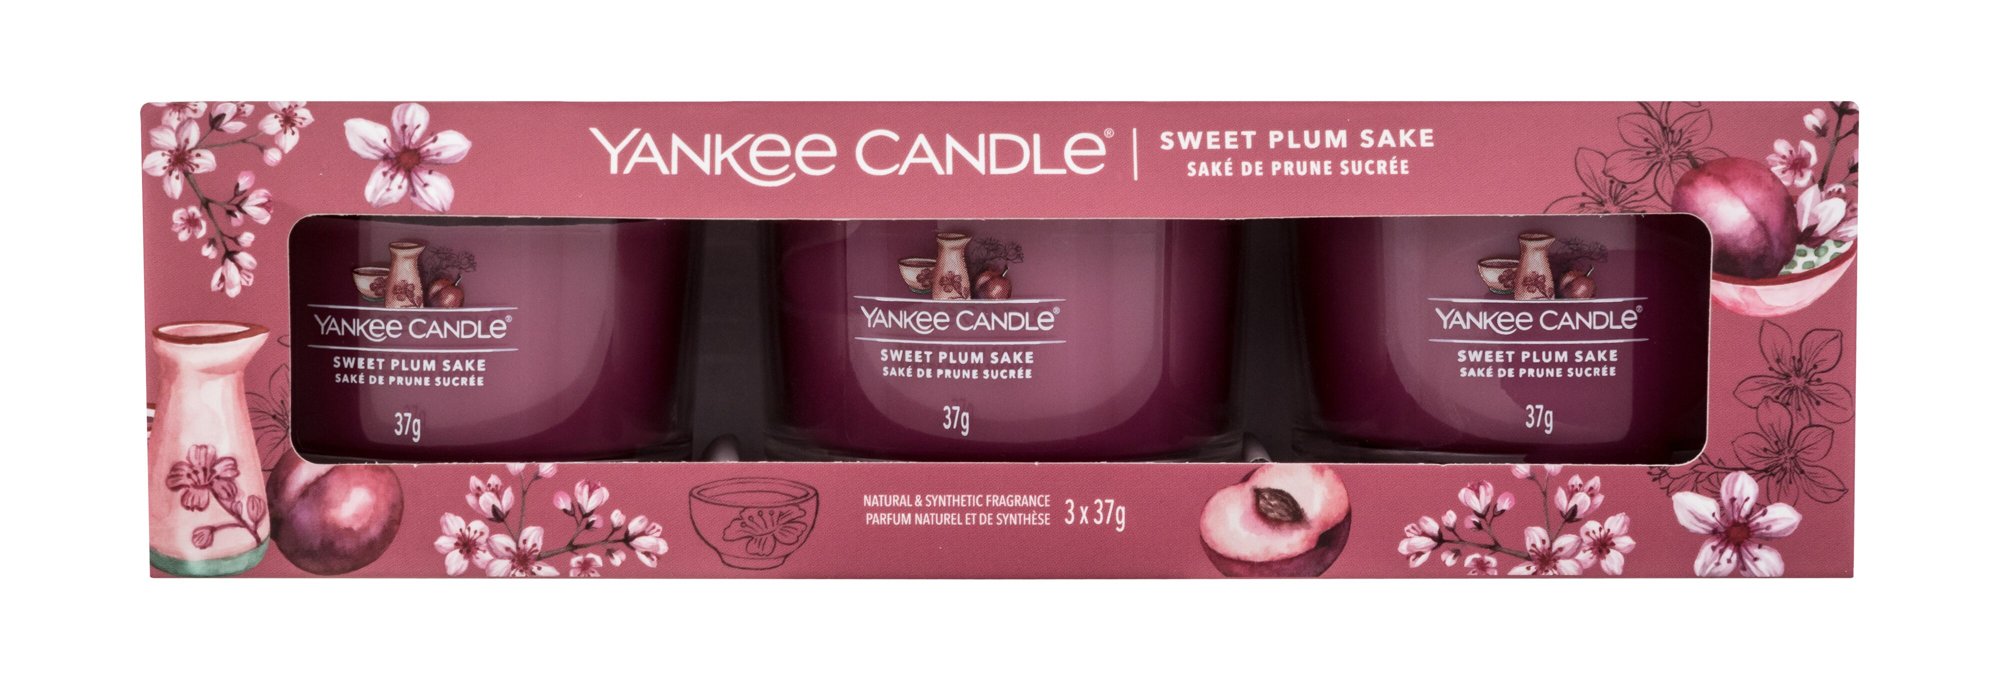 Yankee Candle Sweet Plum Sake 37g Scented Candle 3 x 37 g Kvepalai Unisex Scented Candle Rinkinys